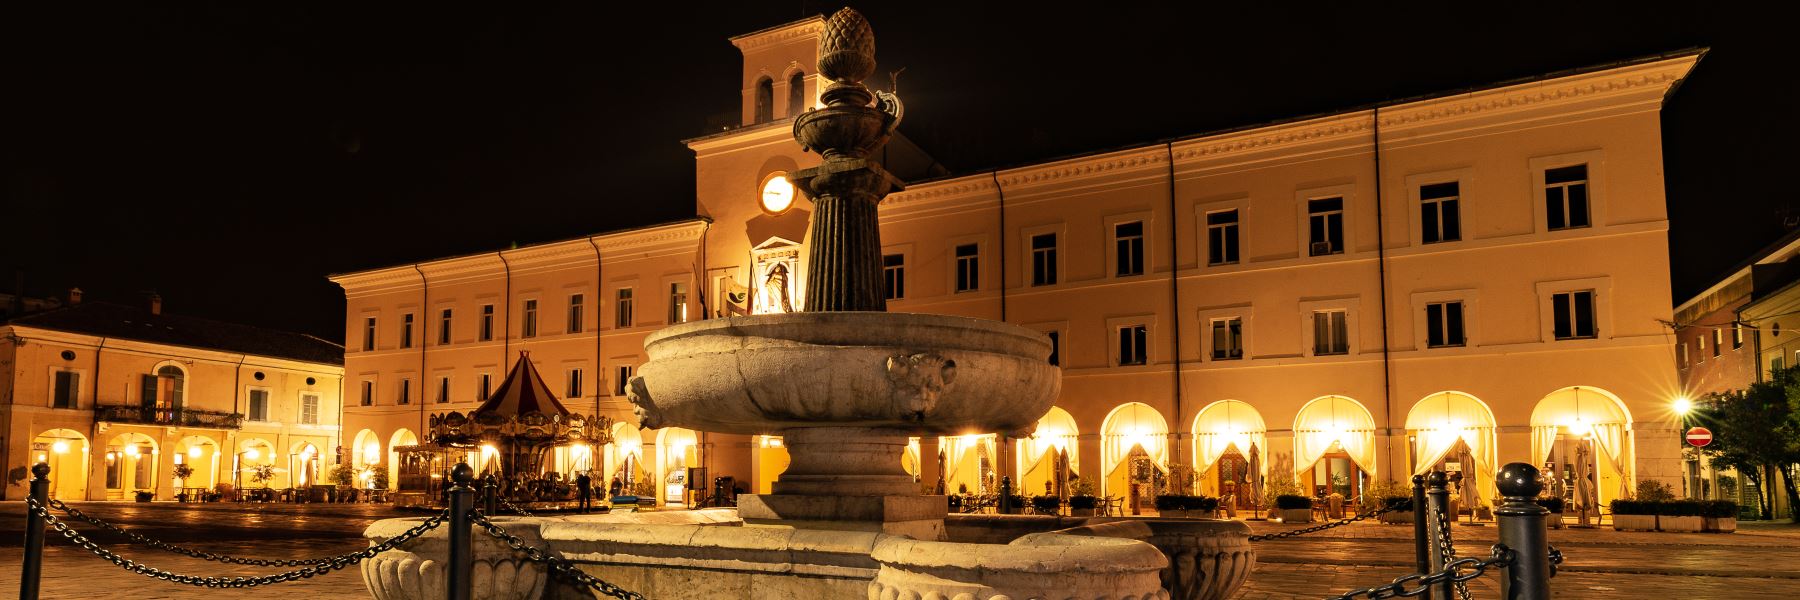 The Fountain in Piazza Garibaldi